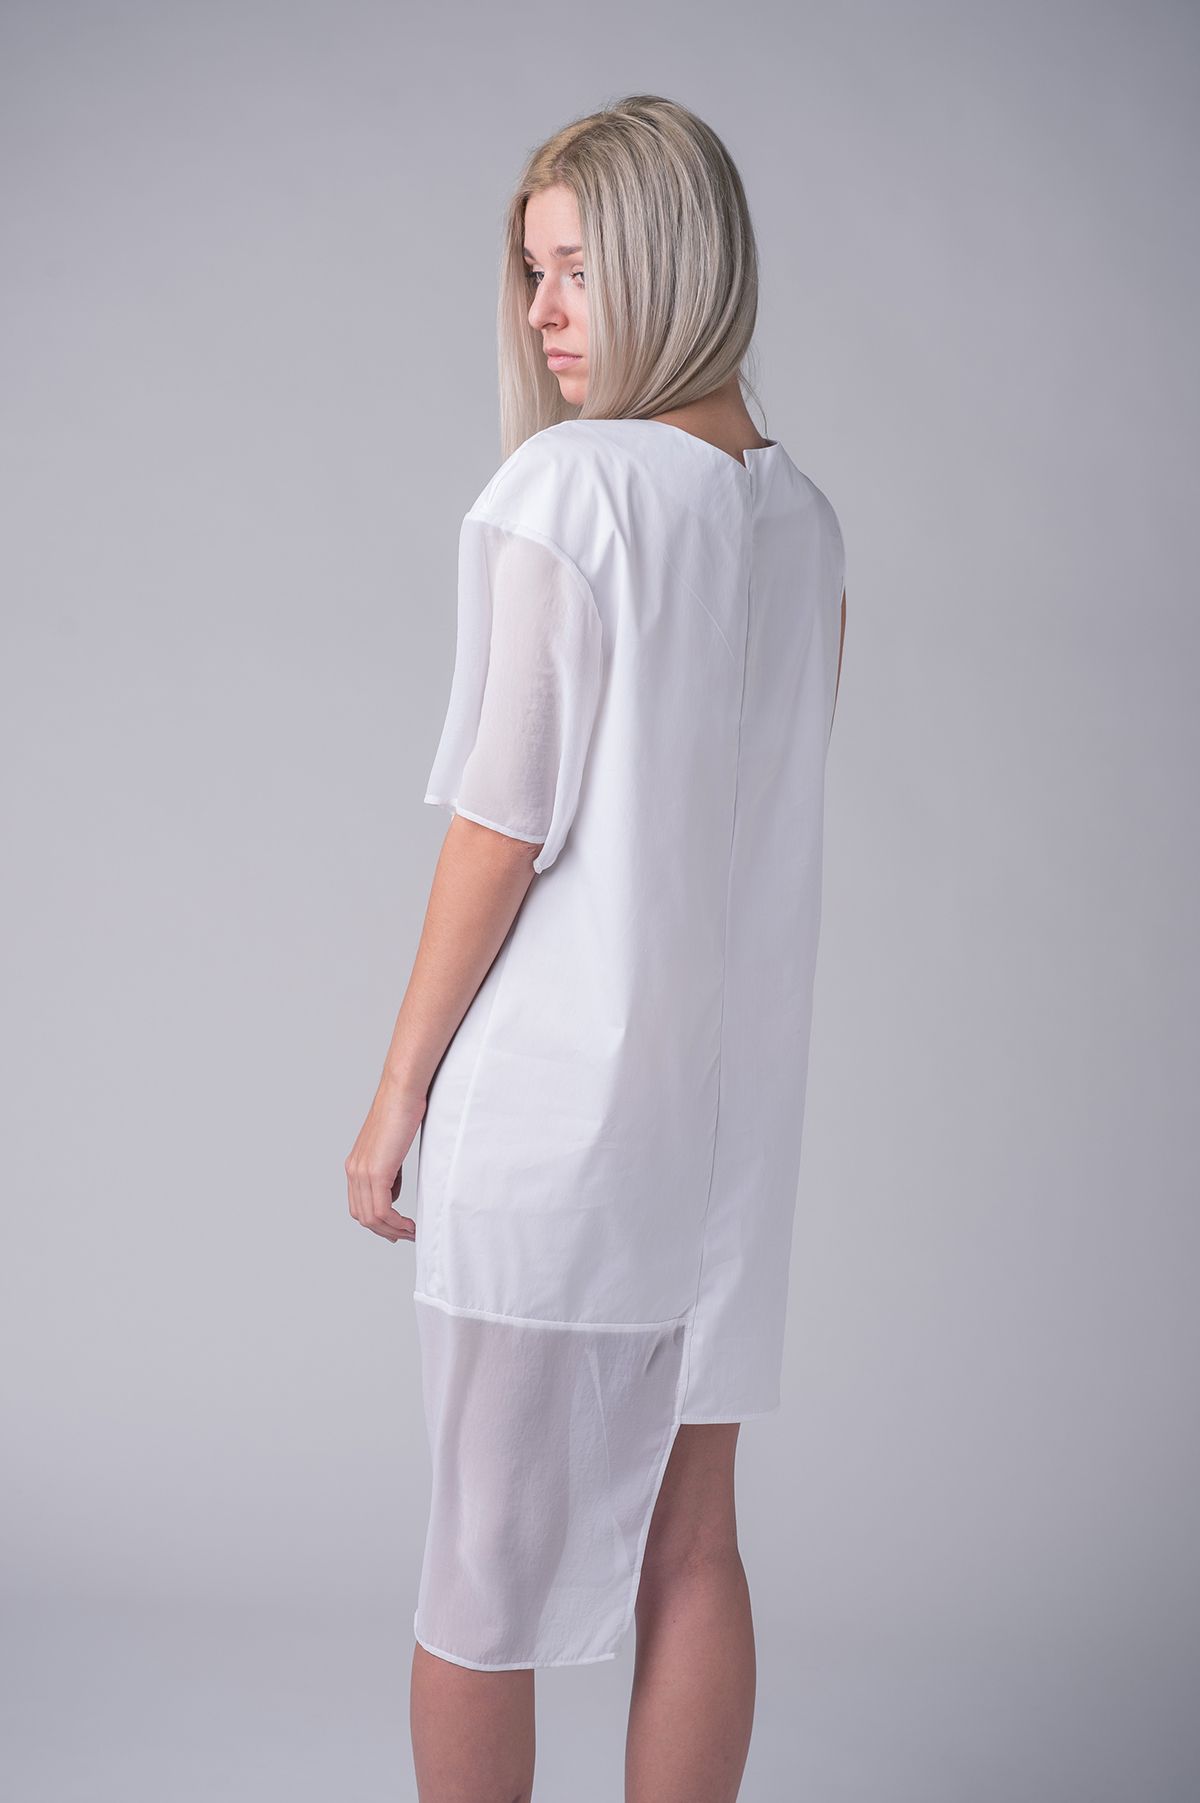 minimal Clothing accecories school studio portrait cloths